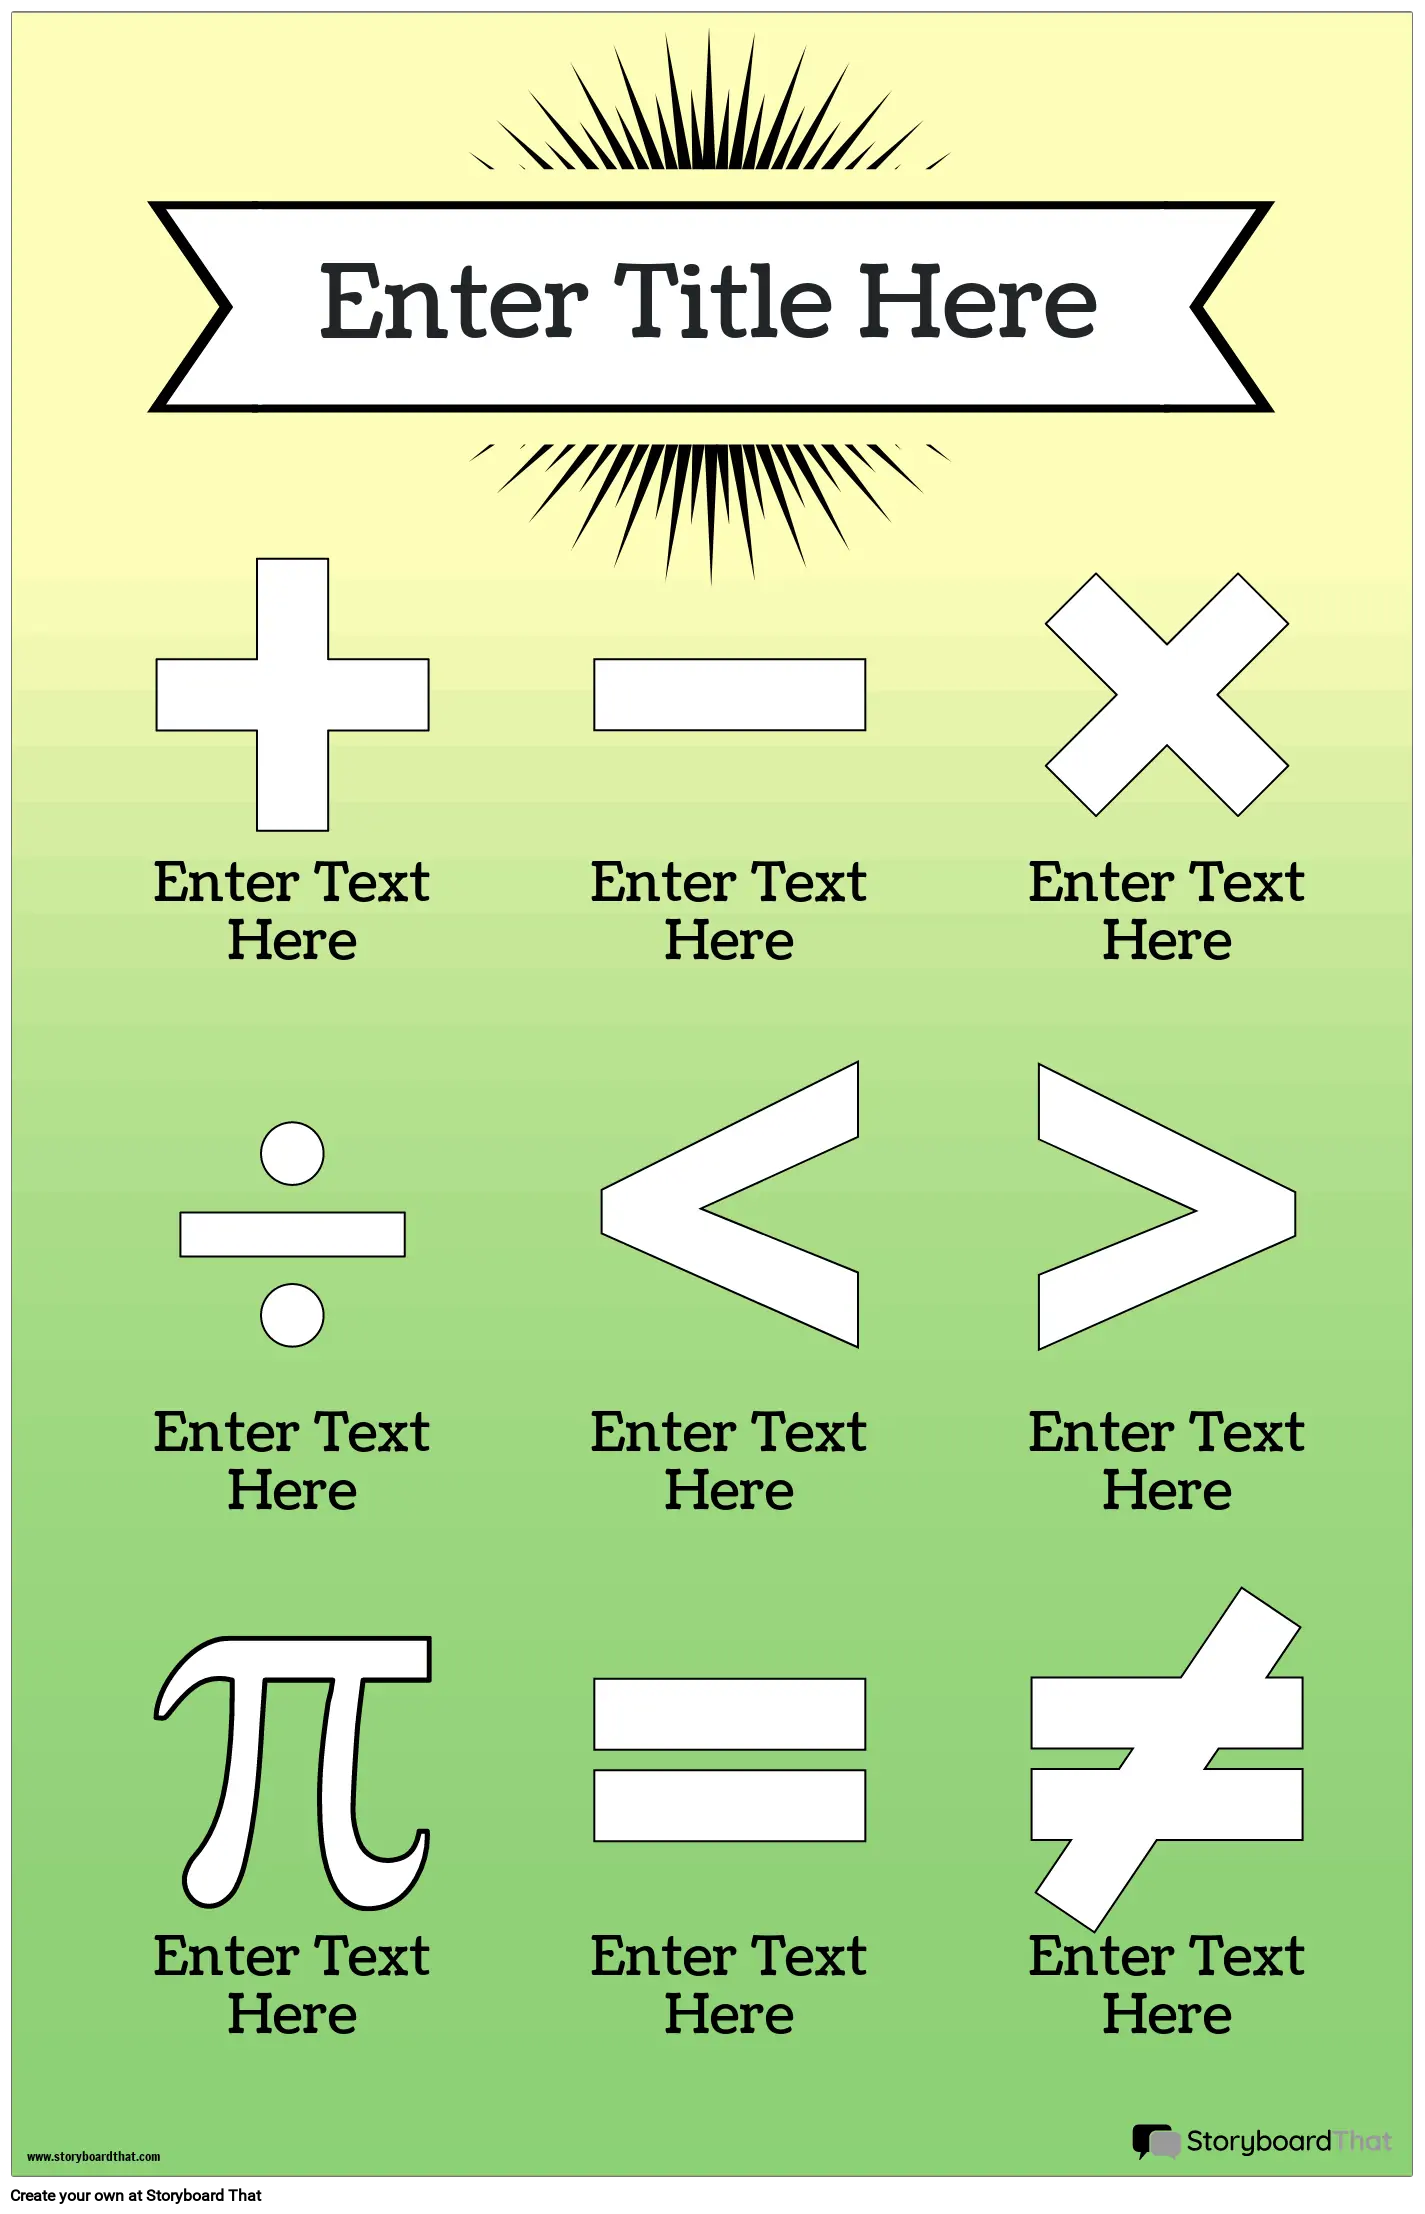 Math Symbols Poster